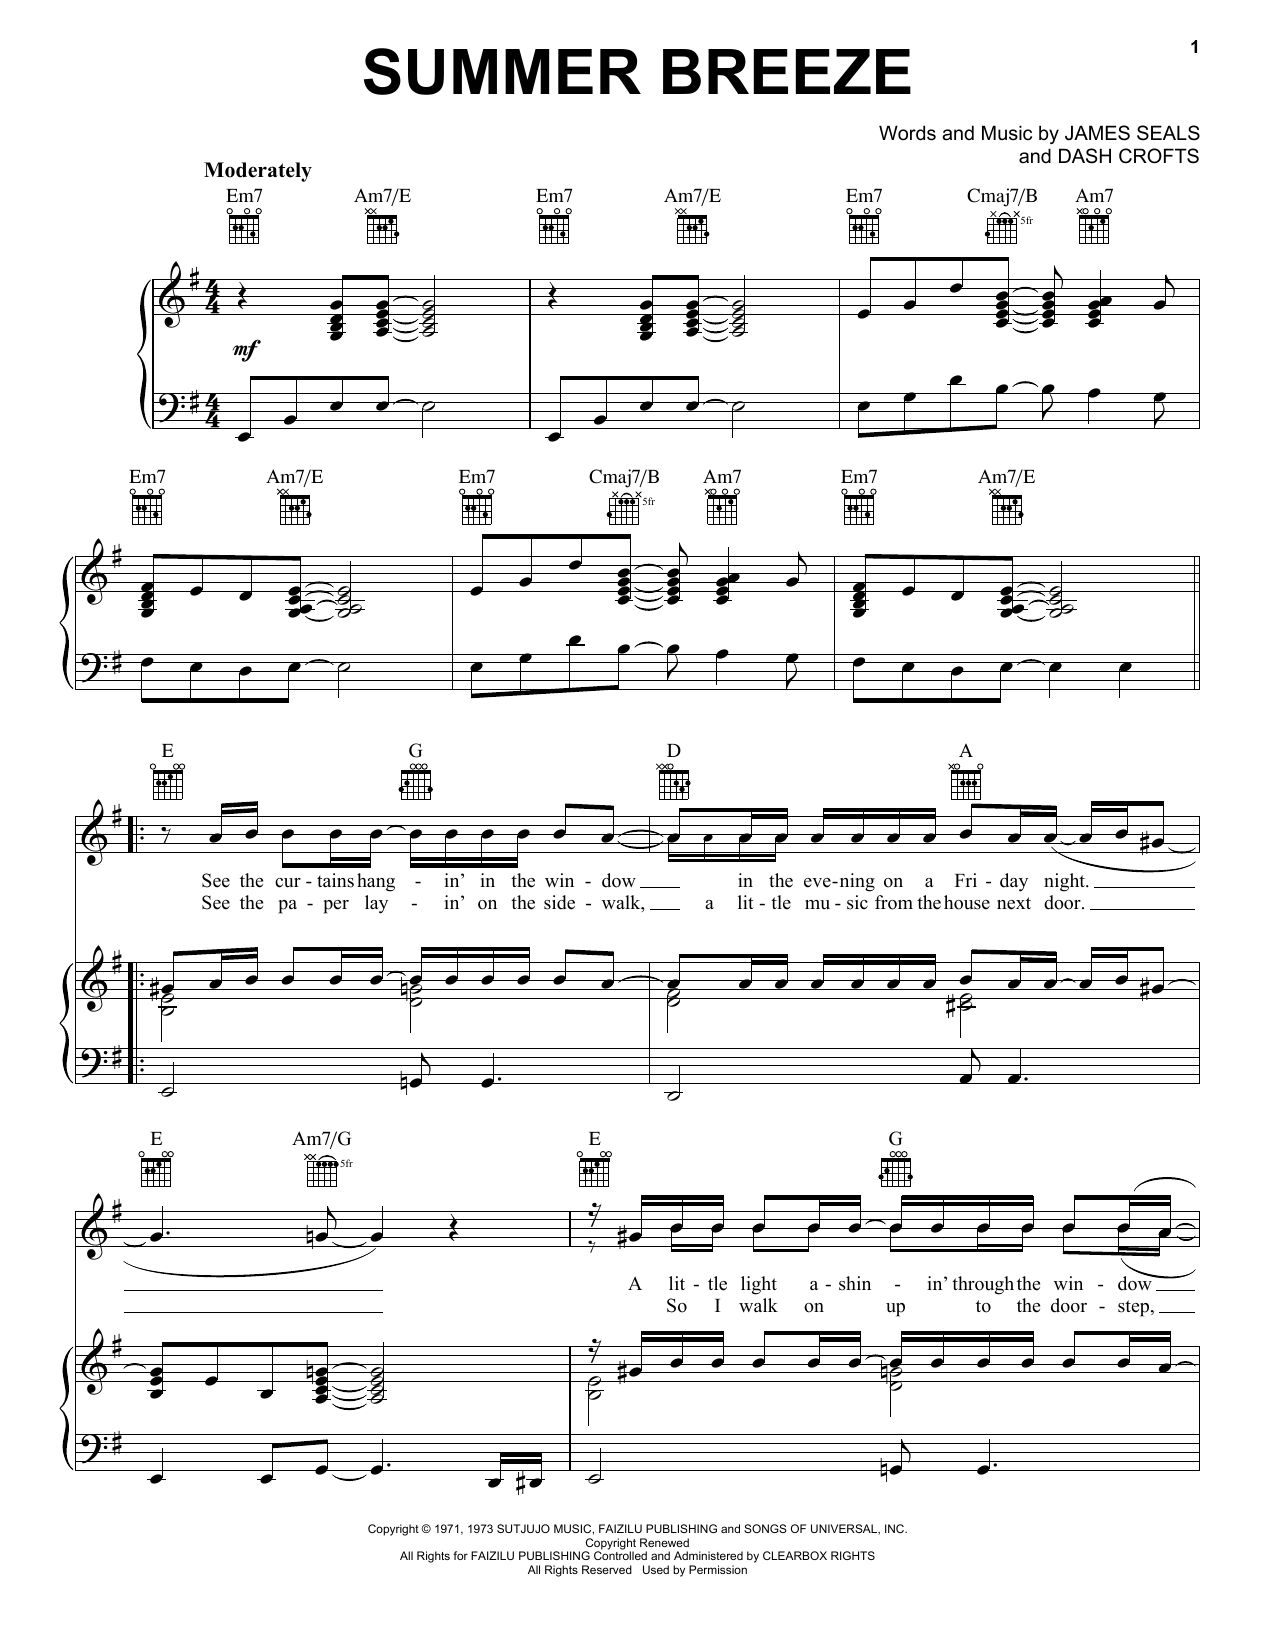 Seals & Crofts Summer Breeze Sheet Music Notes & Chords for Mandolin - Download or Print PDF